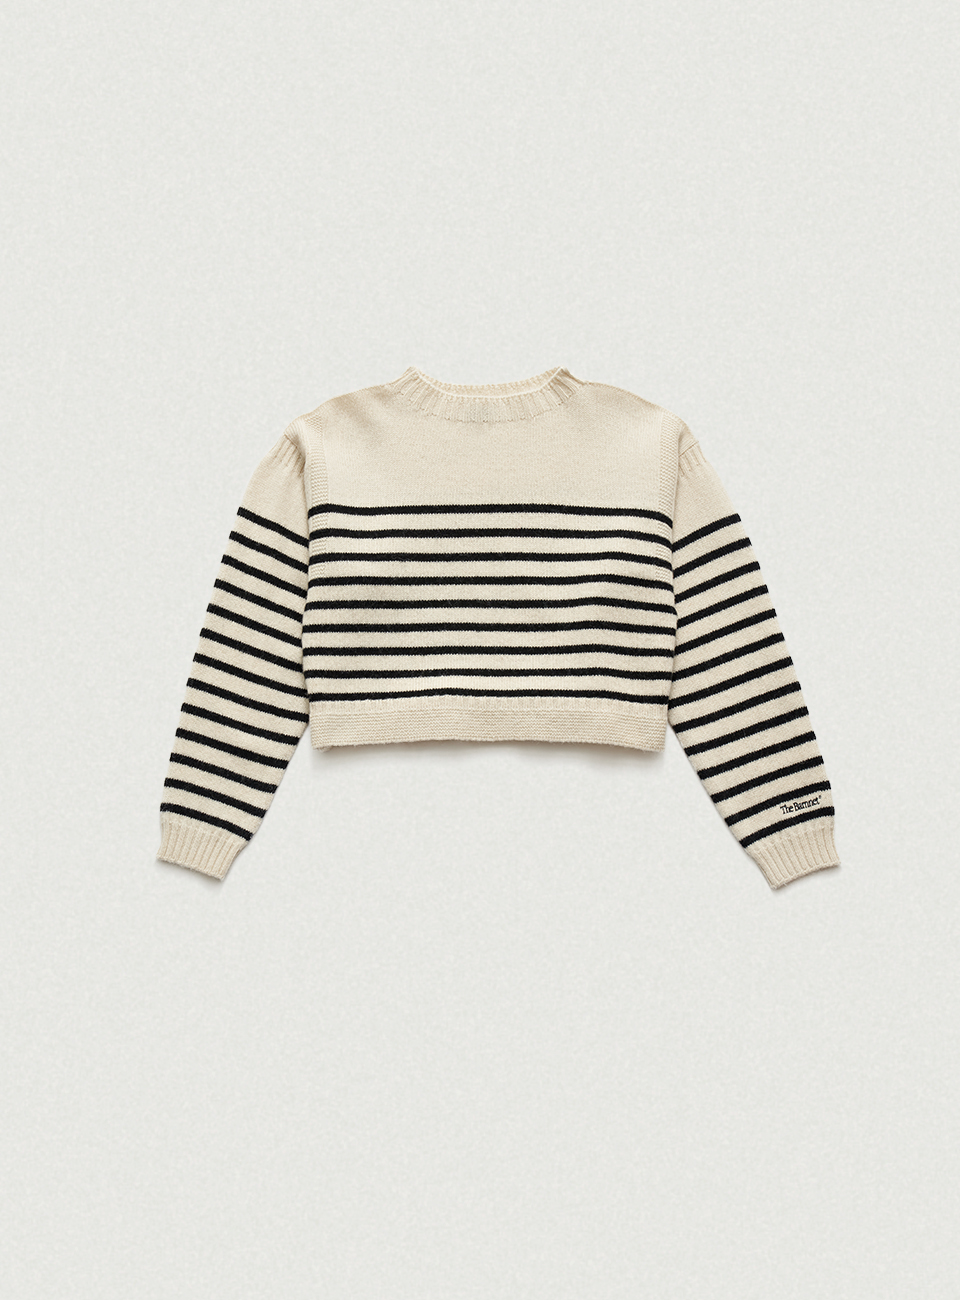 Shetland Marine Striped Knit Sweater [10/6부터 순차 배송]